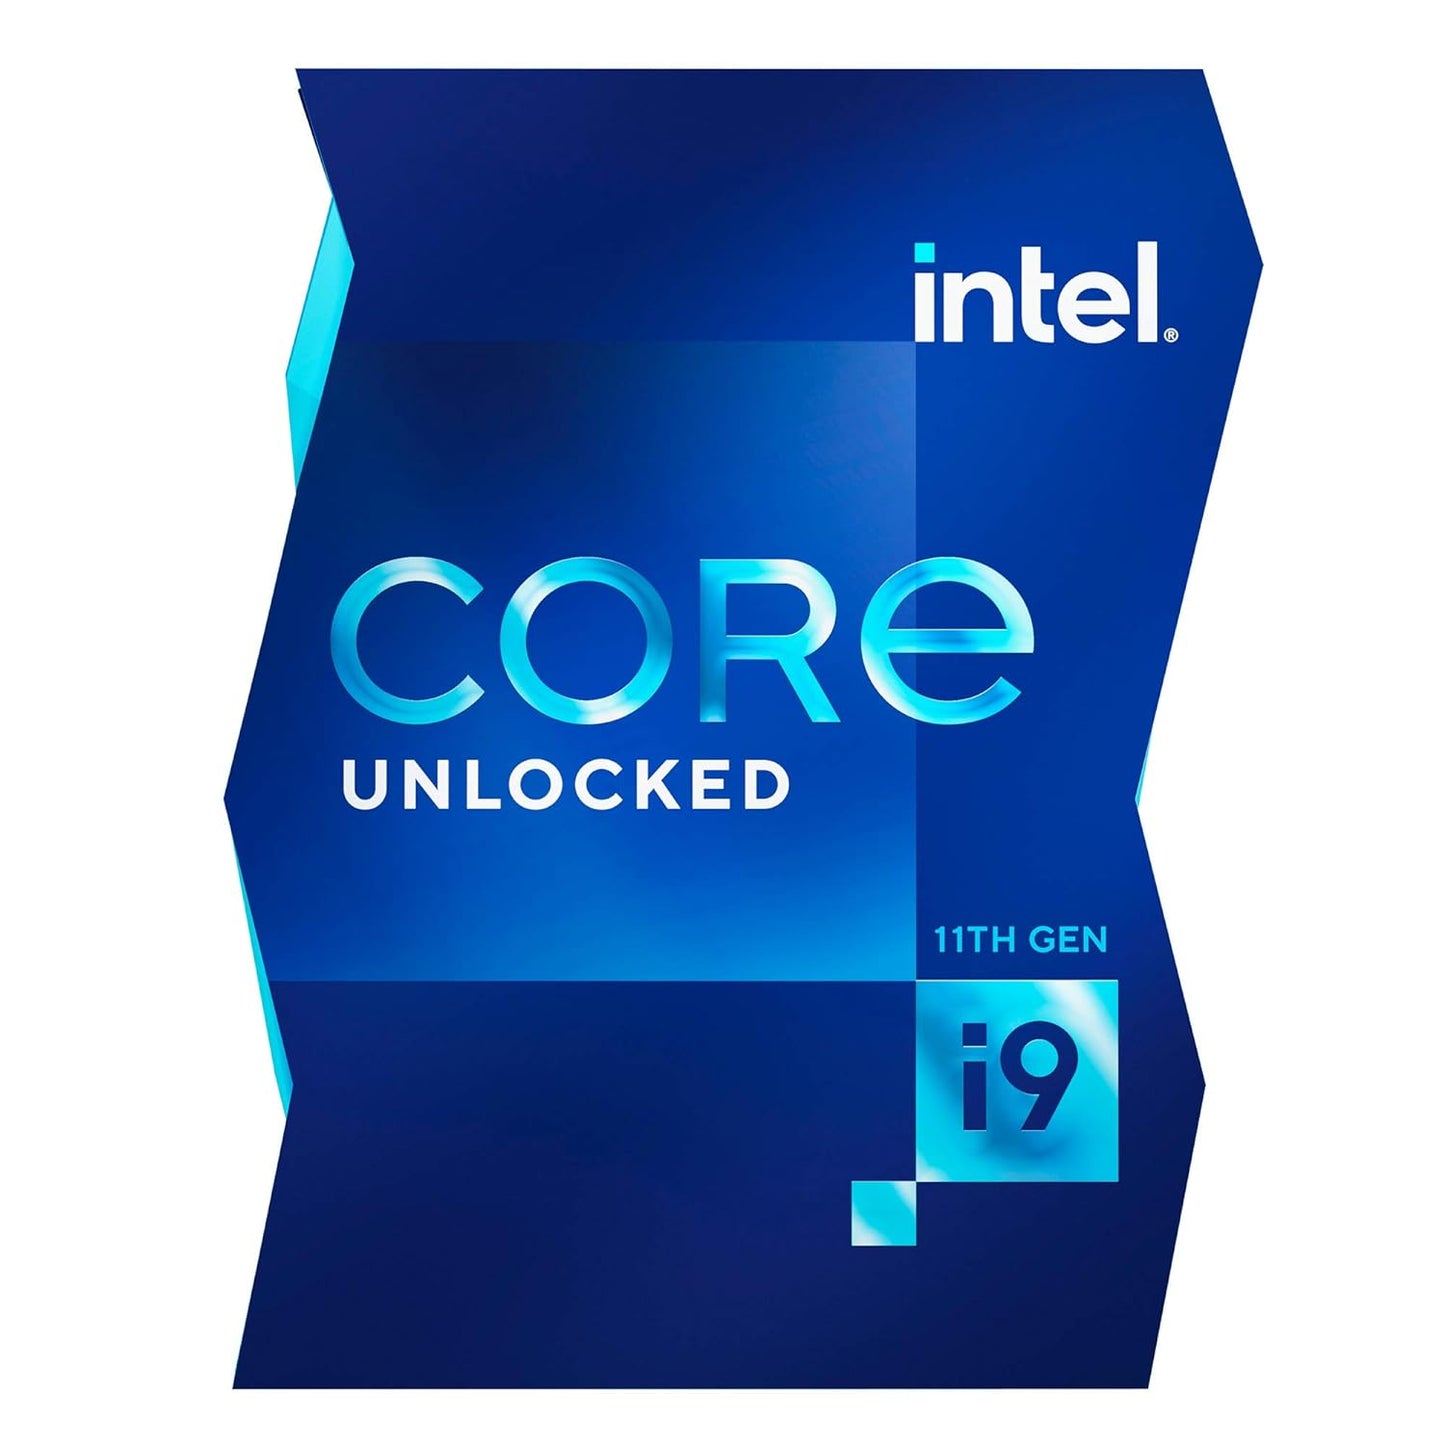 Intel Core i9-11900K 3.5/5.3 GHz Rocket Lake 8-Core LGA 1200 Desktop Processor with UHD Graphics 750